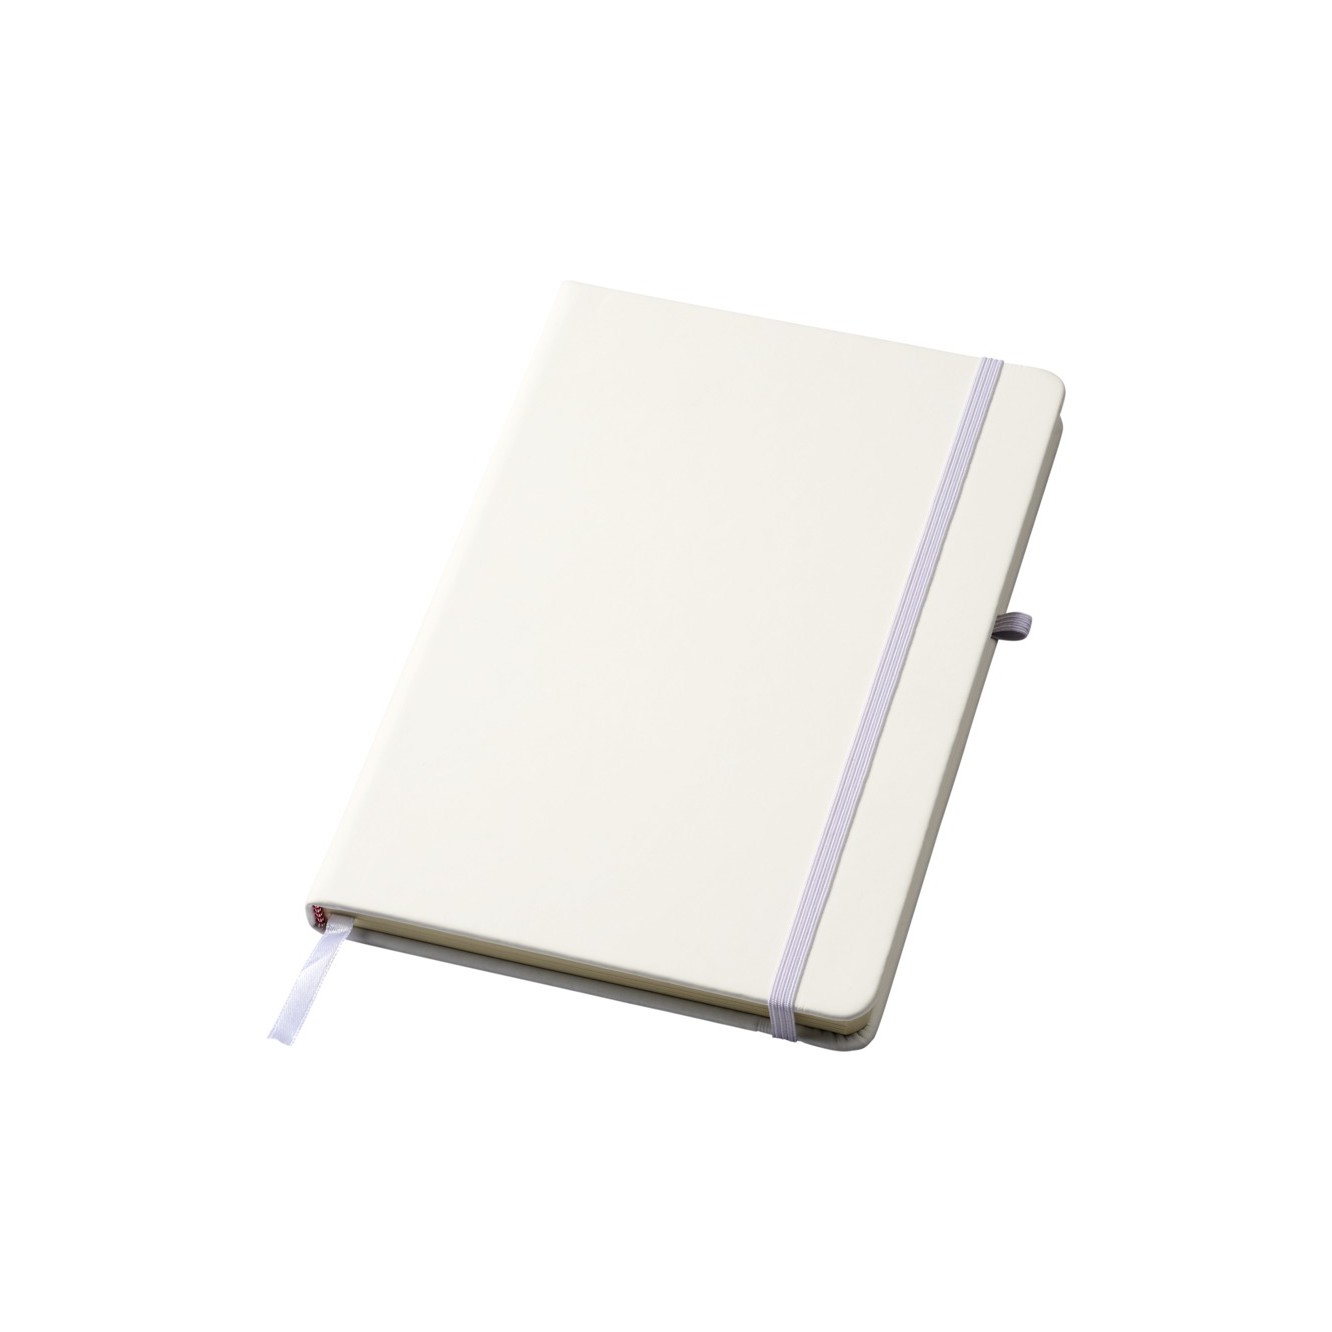 Polar A5 notebook - gelinieerd